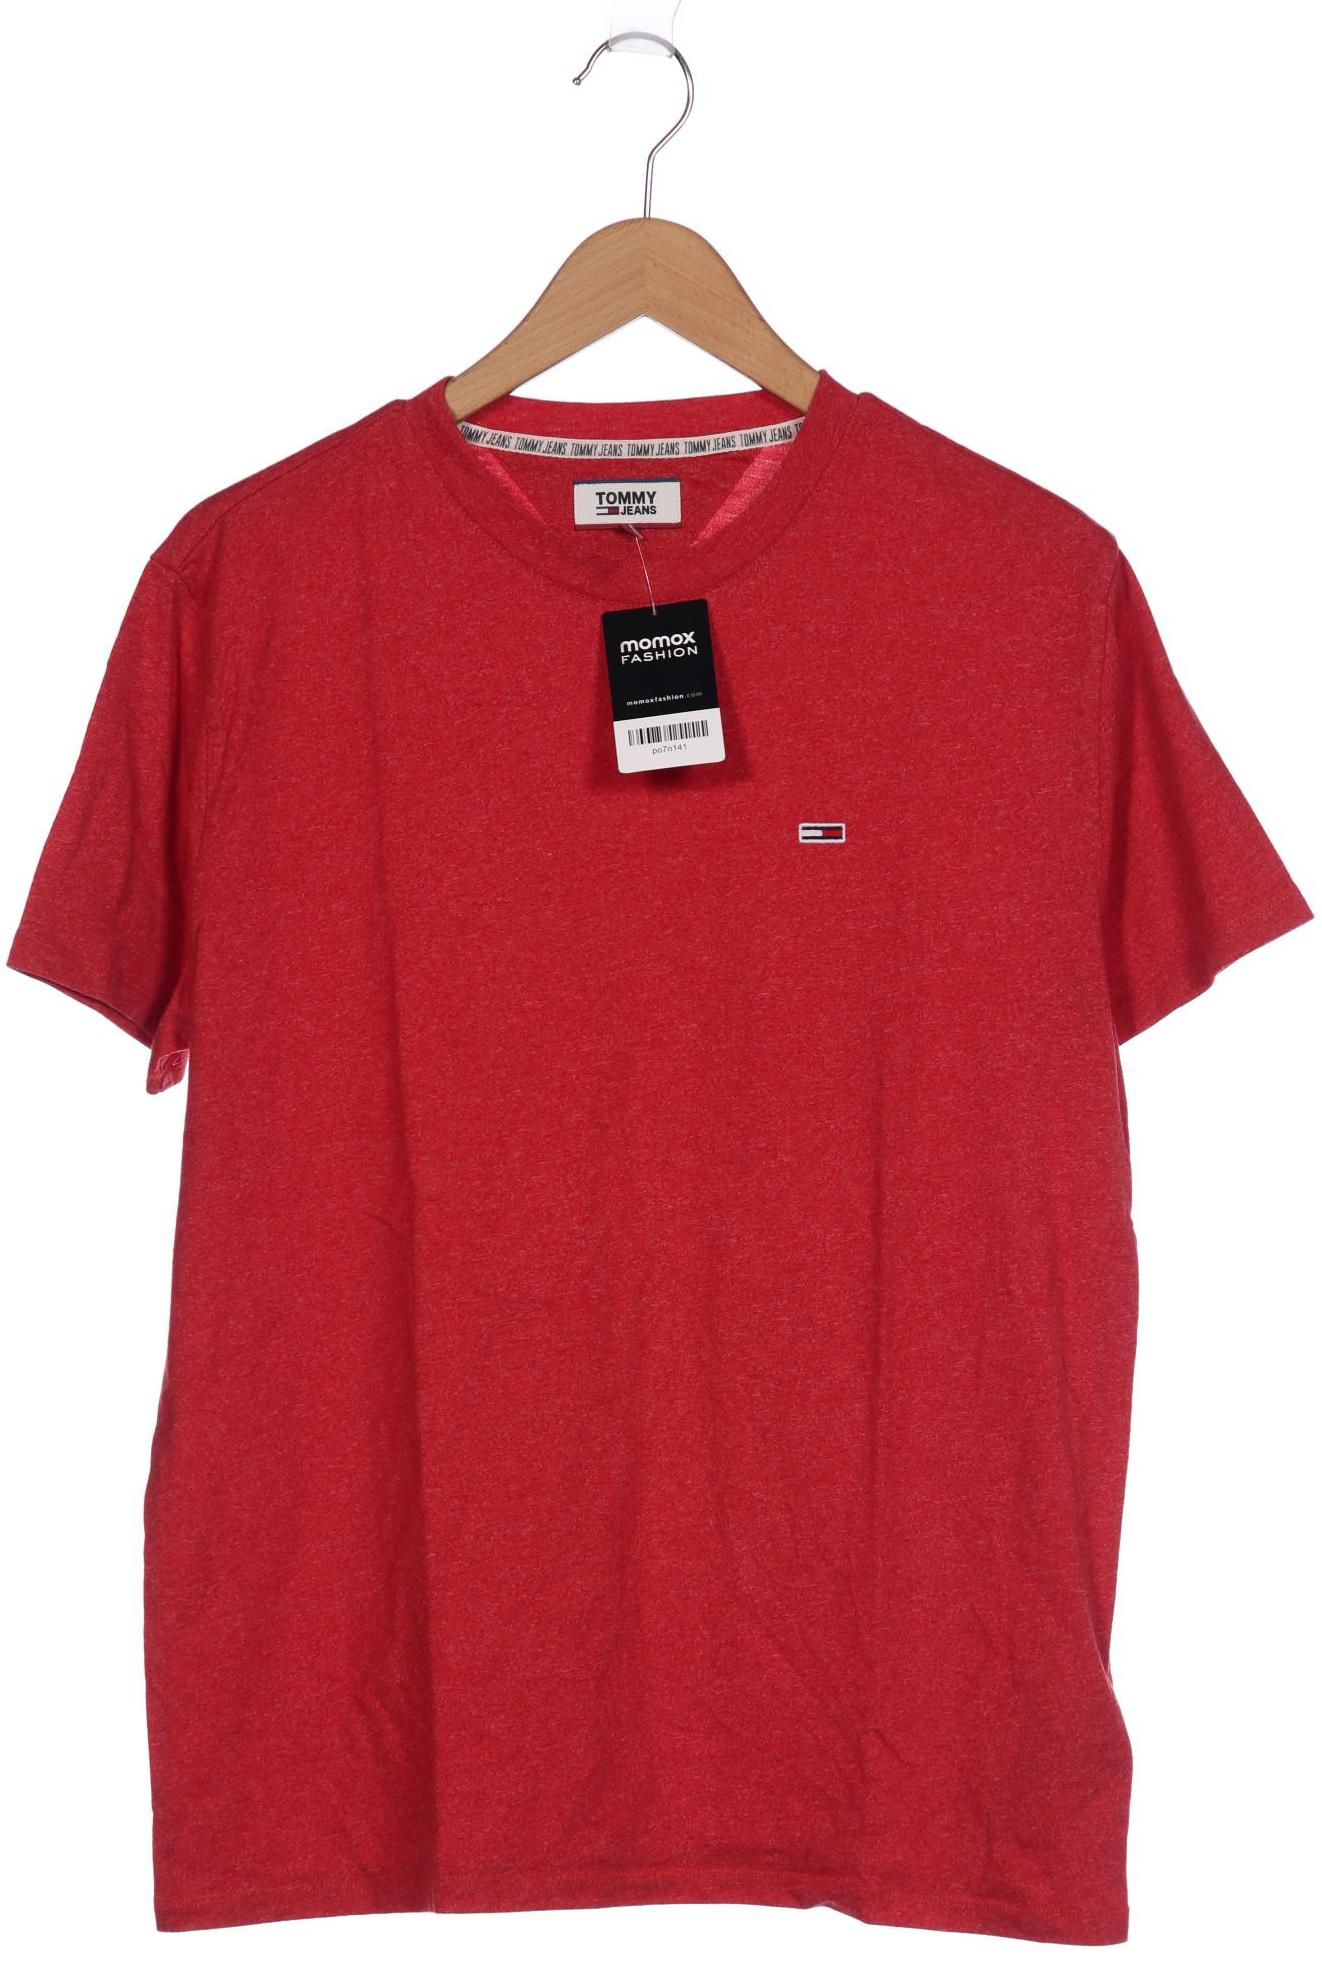 Tommy Jeans Damen T-Shirt, rot, Gr. 42 von Tommy Jeans